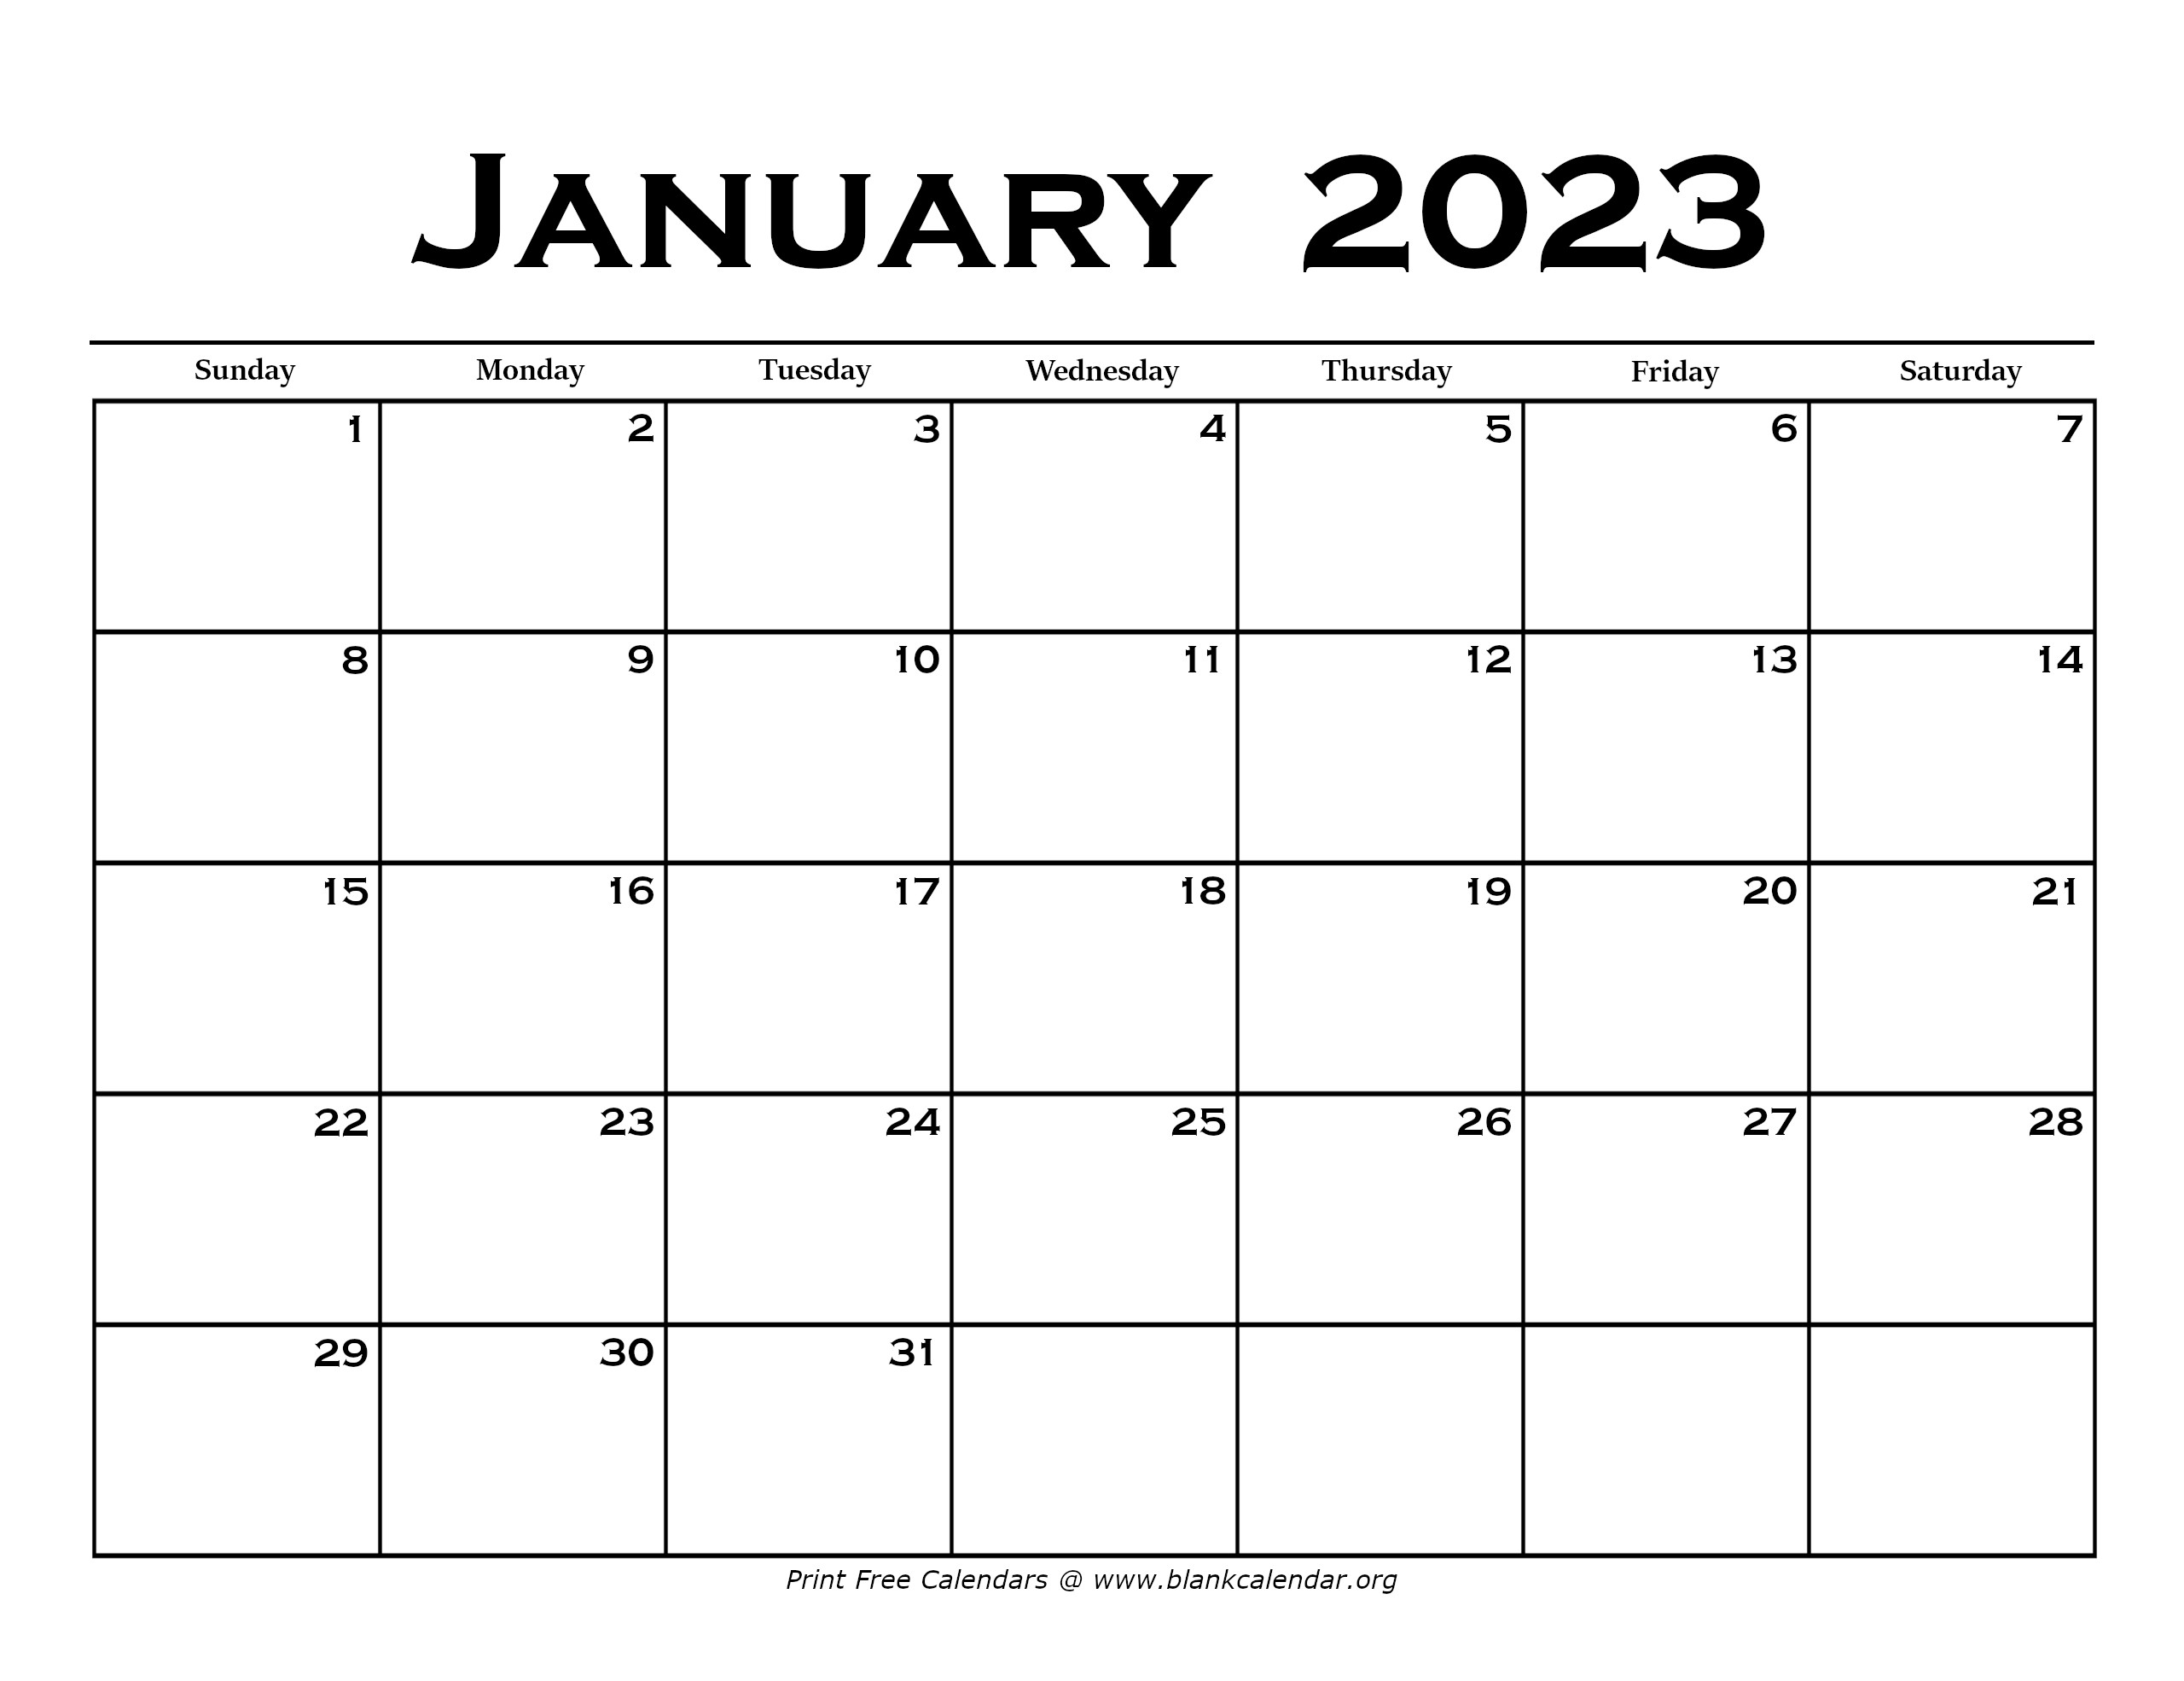 January 2023 Calendar – Blank Calendar